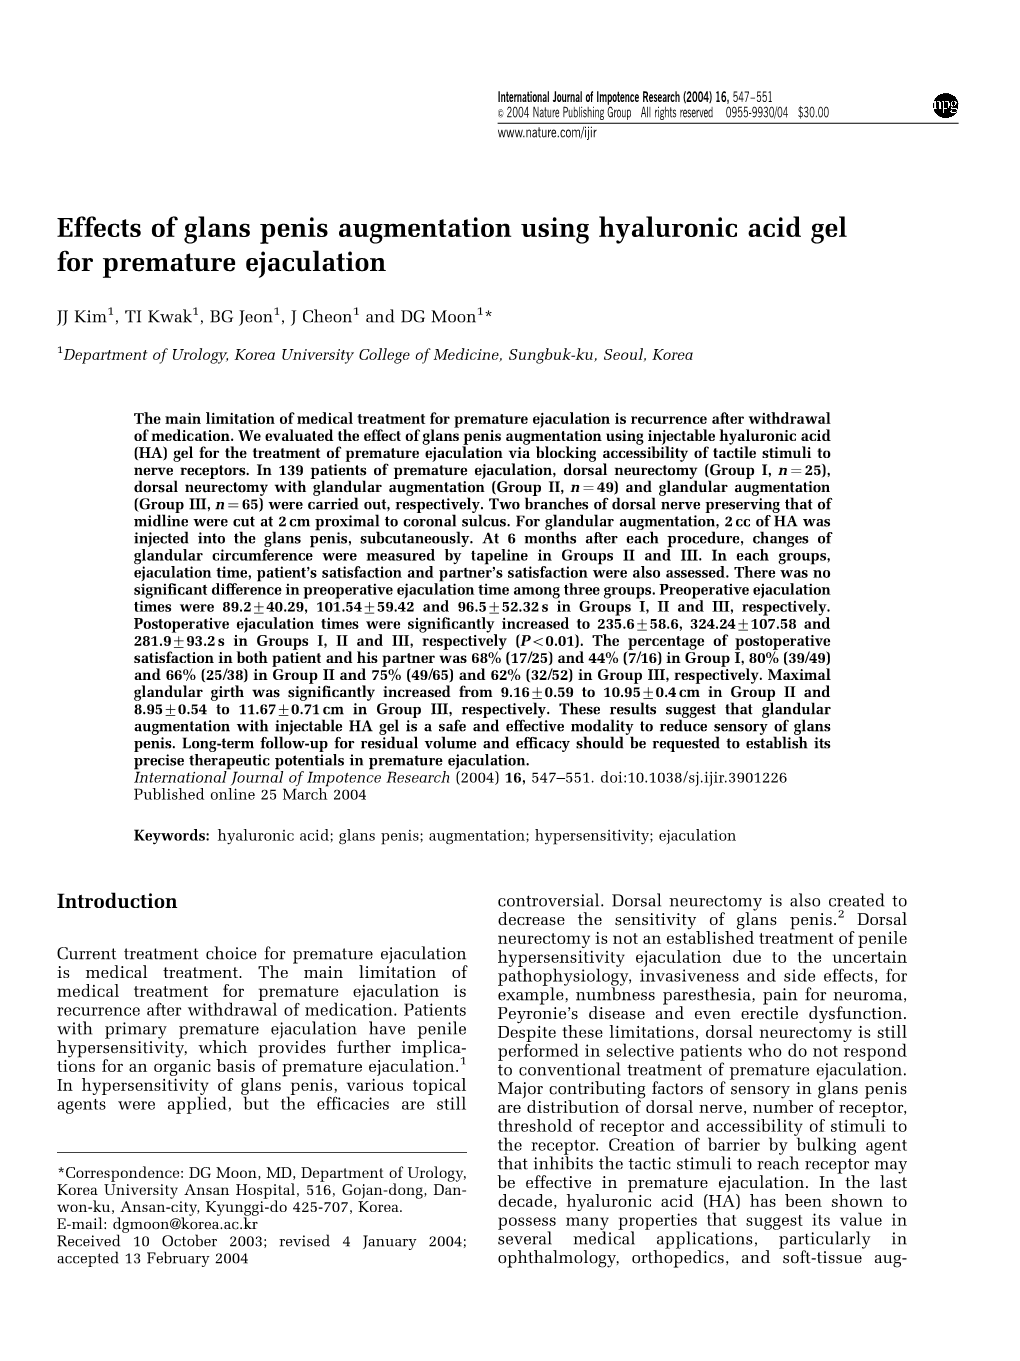 Effects of Glans Penis Augmentation Using Hyaluronic Acid Gel for Premature Ejaculation